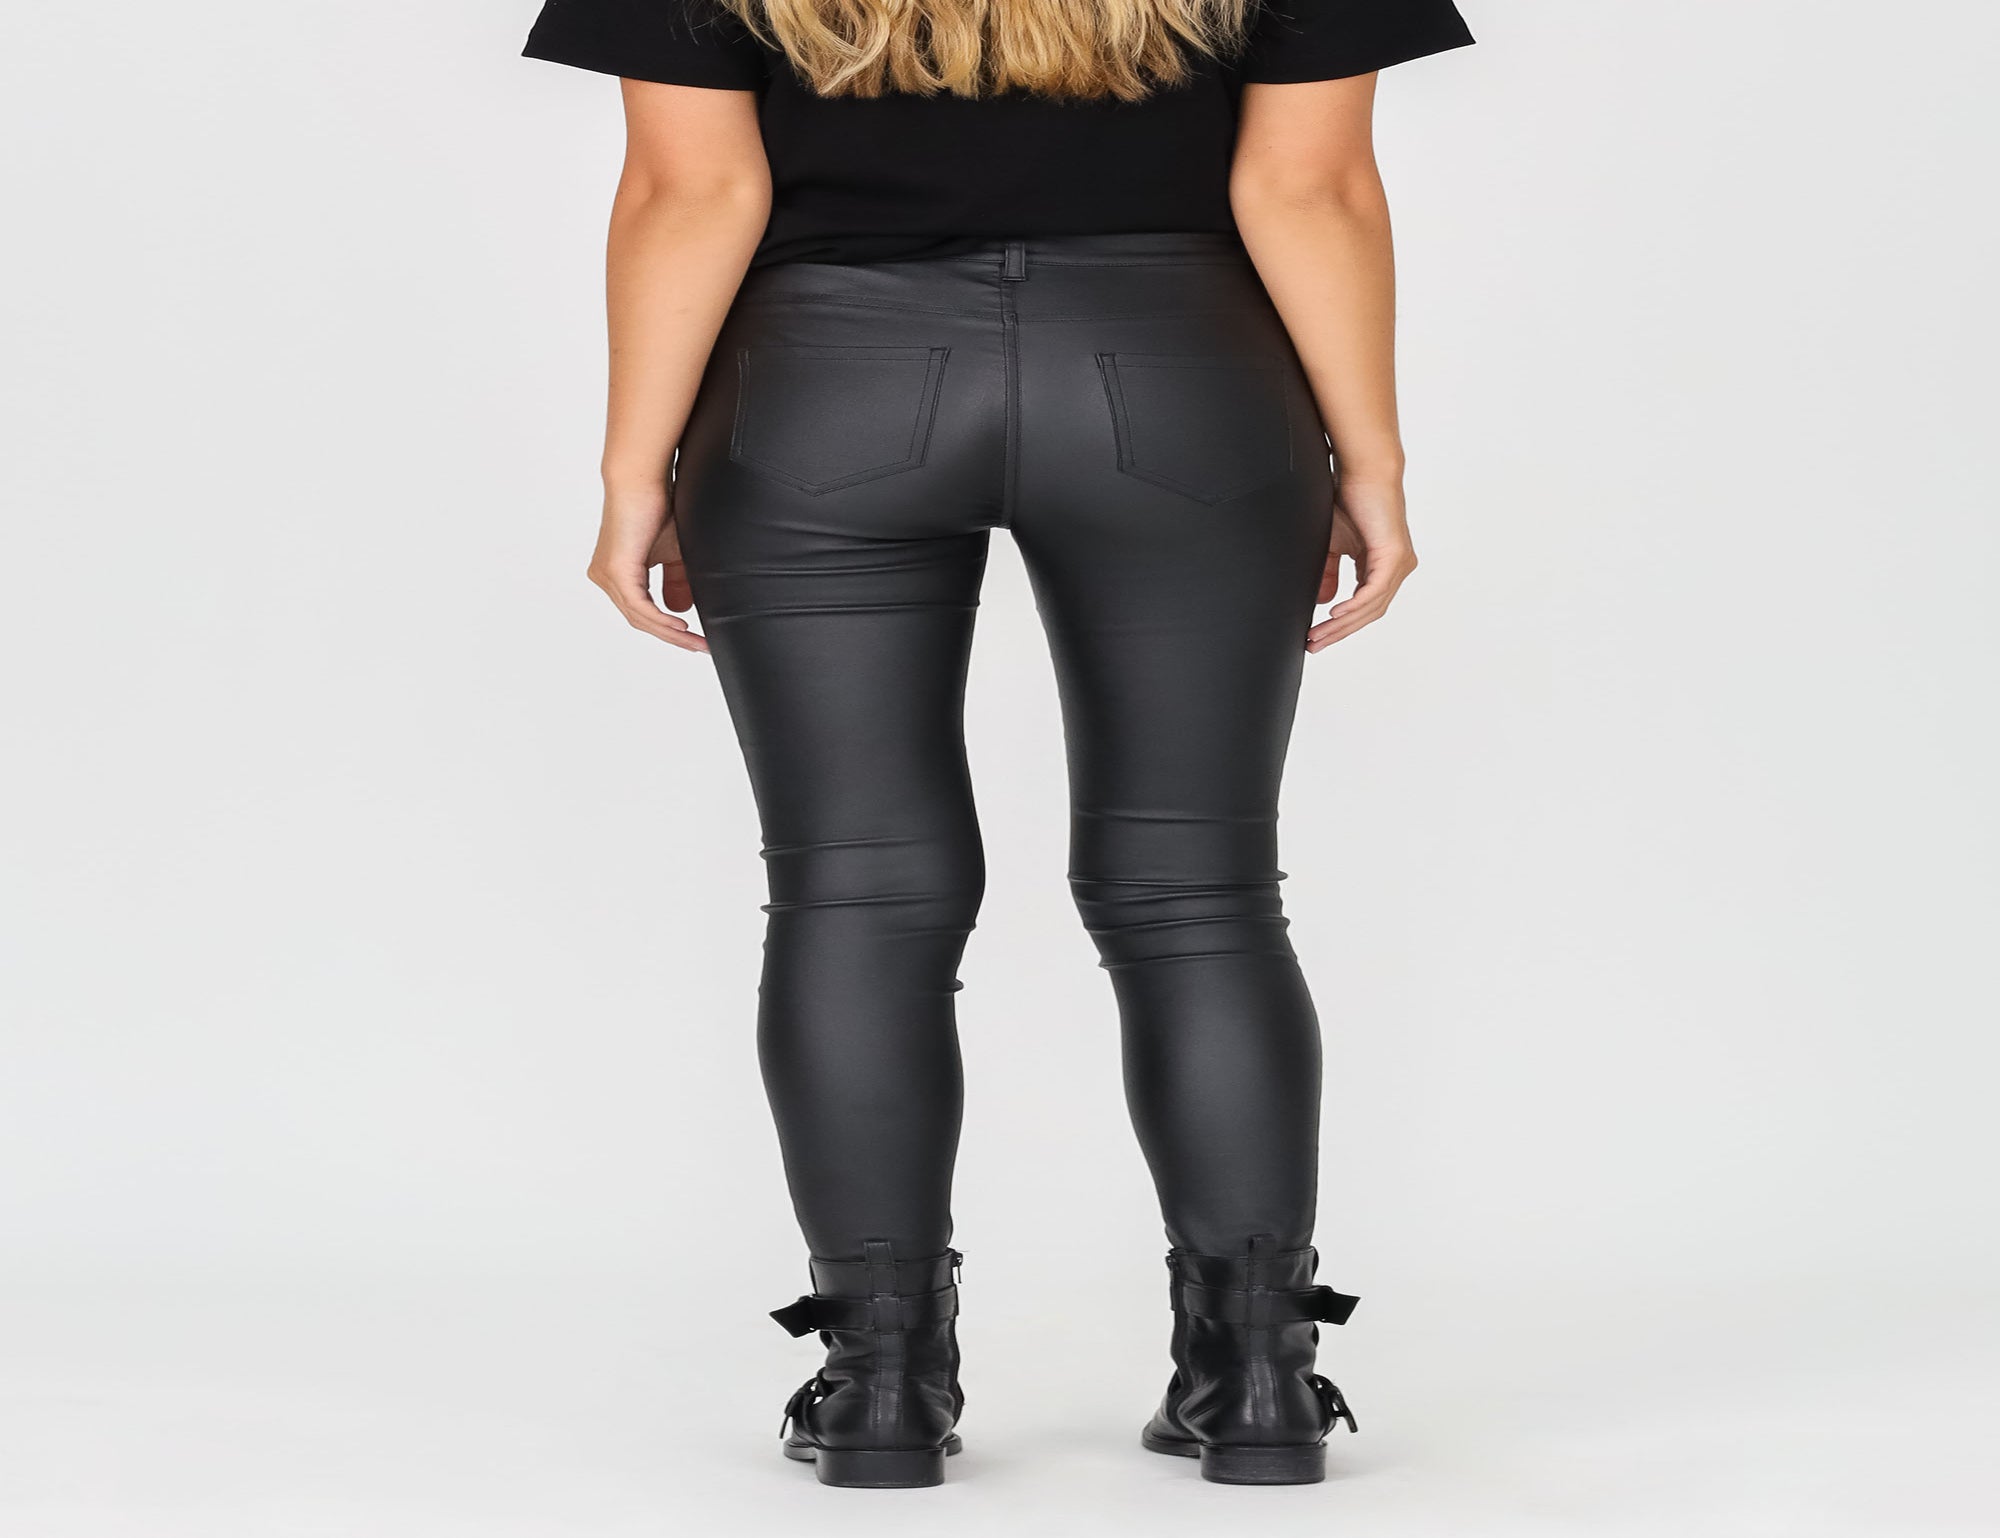 lyd Amfibiekøretøjer Bliver værre High Rise Leather Look Jean - Black - Pants - Full Length - Women's  Clothing - Storm